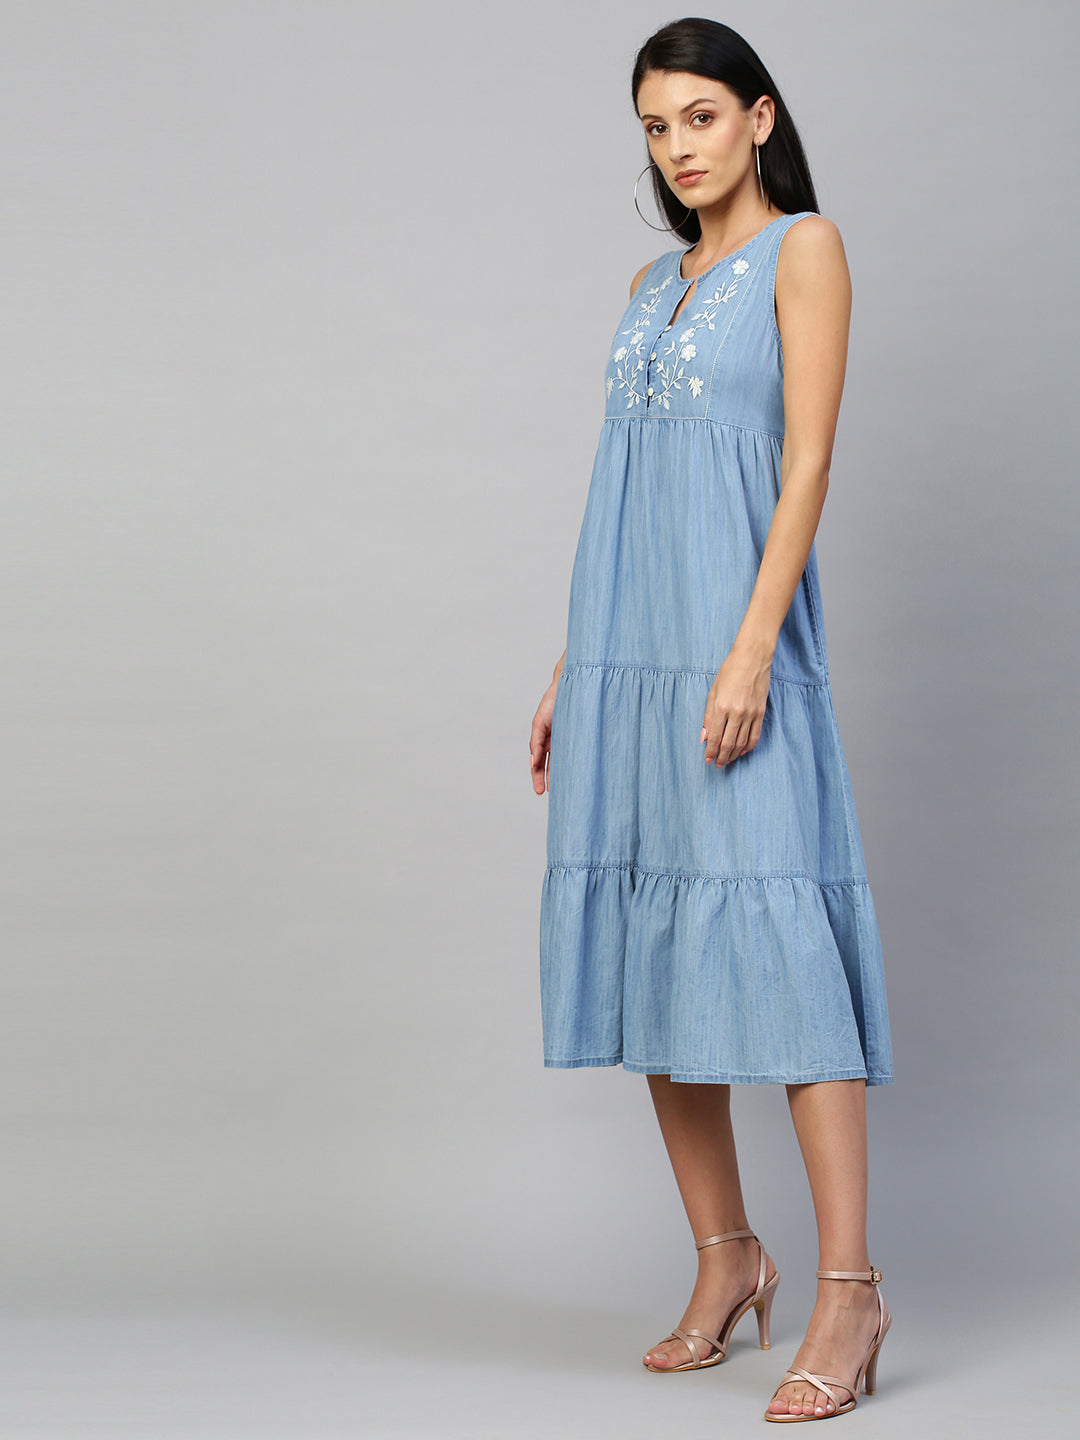 Buy GLAMODA Women A-Line Light Blue Pinafore Denim Midi Dress for Women  (Small) at Amazon.in